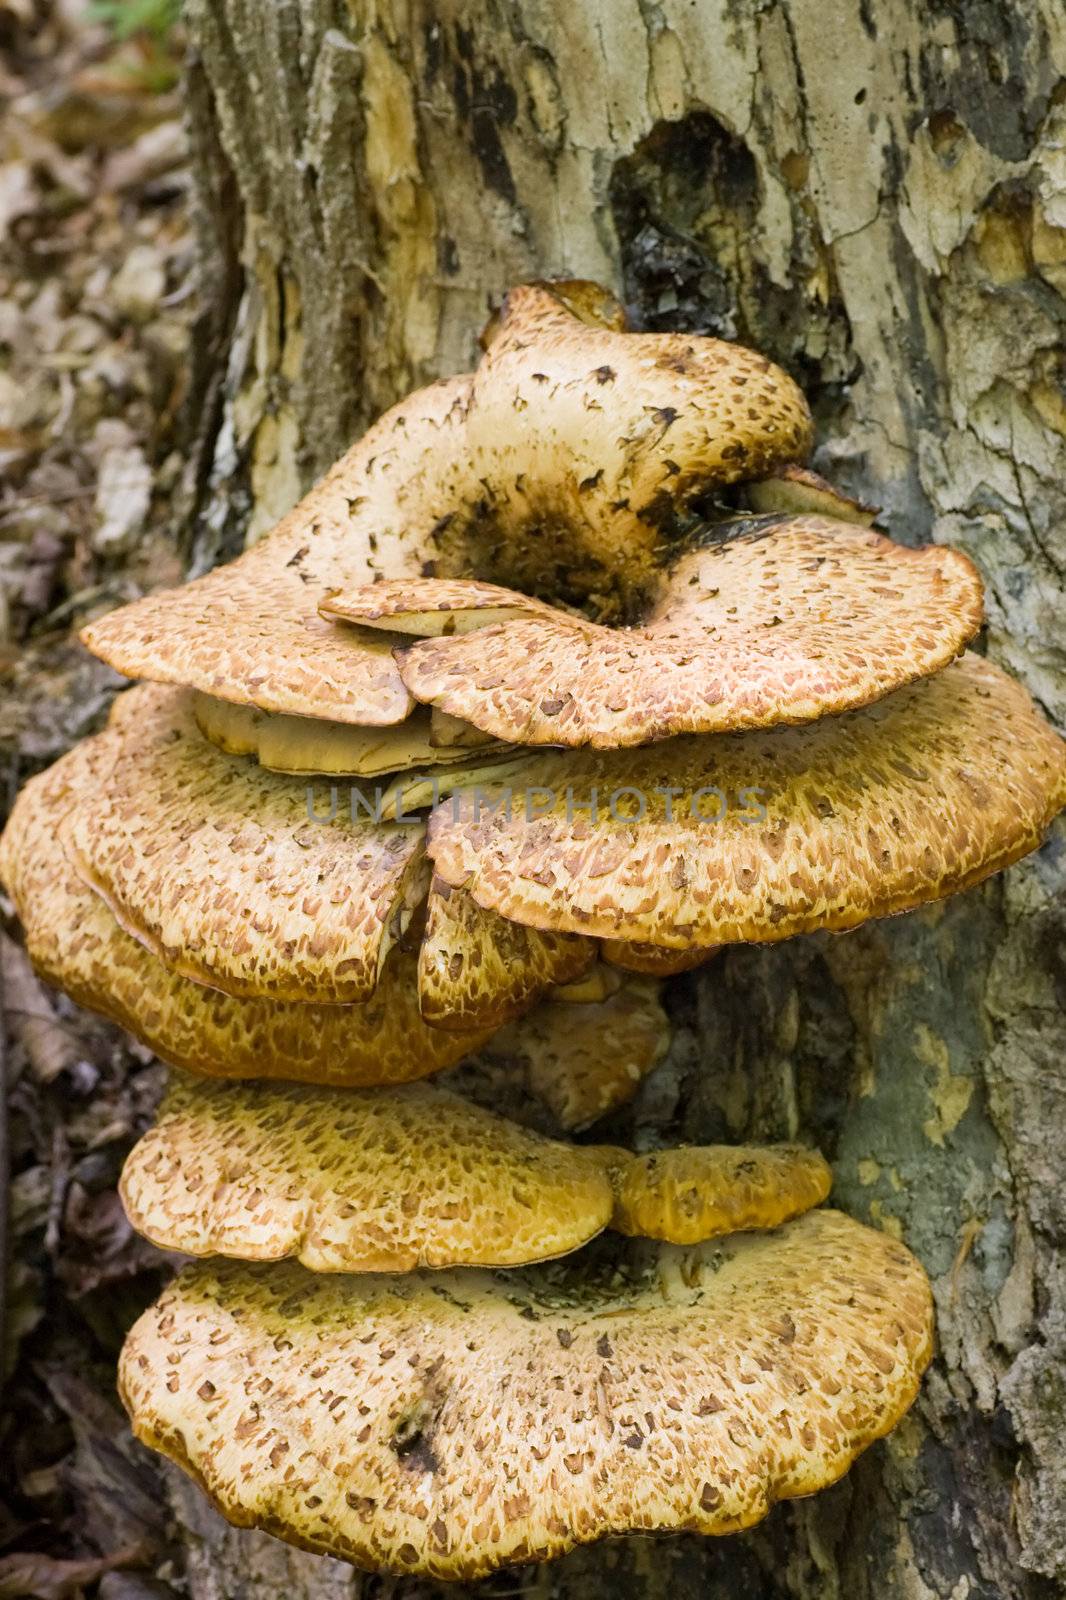 Mushrooms growing on Tree Trunk by woodygraphs